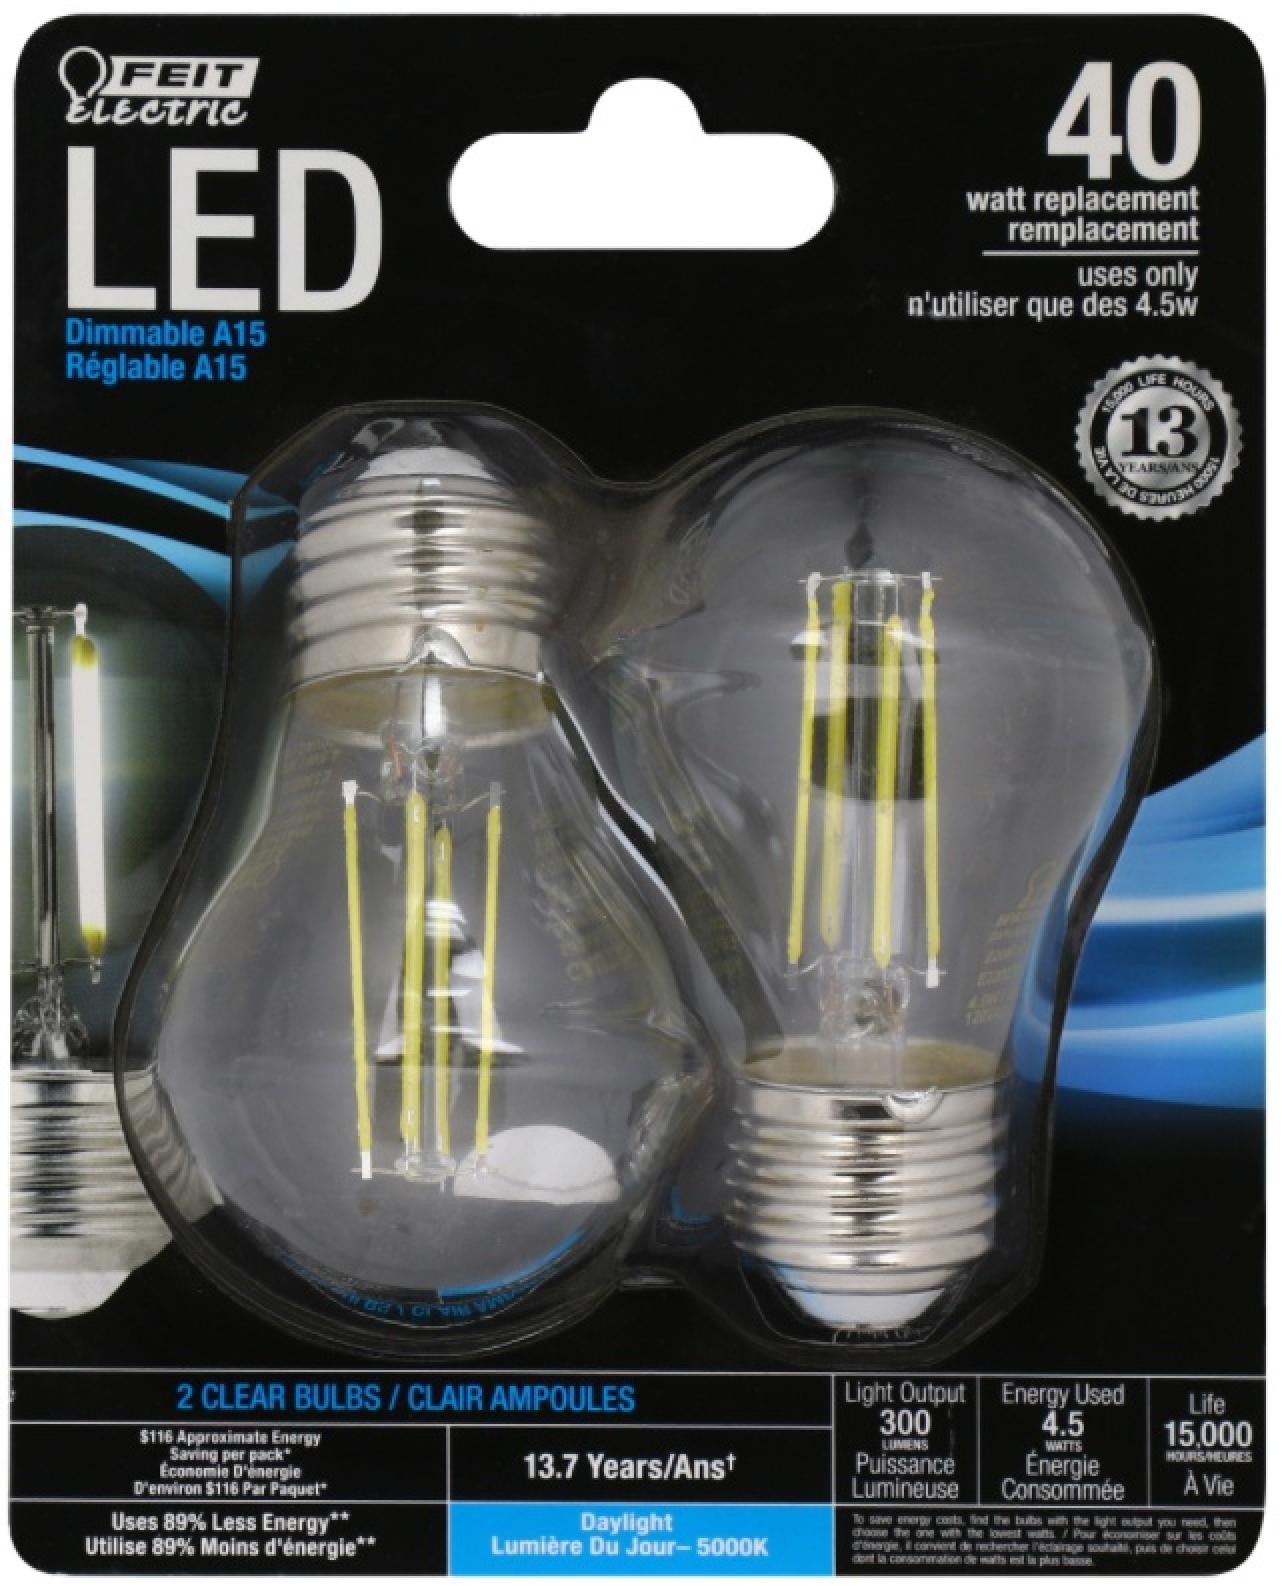 Fiet Electric LED 40 Watt Equivalent 300 Lumen A15 Daylight Dimmable Light Bulb (2 Pack)